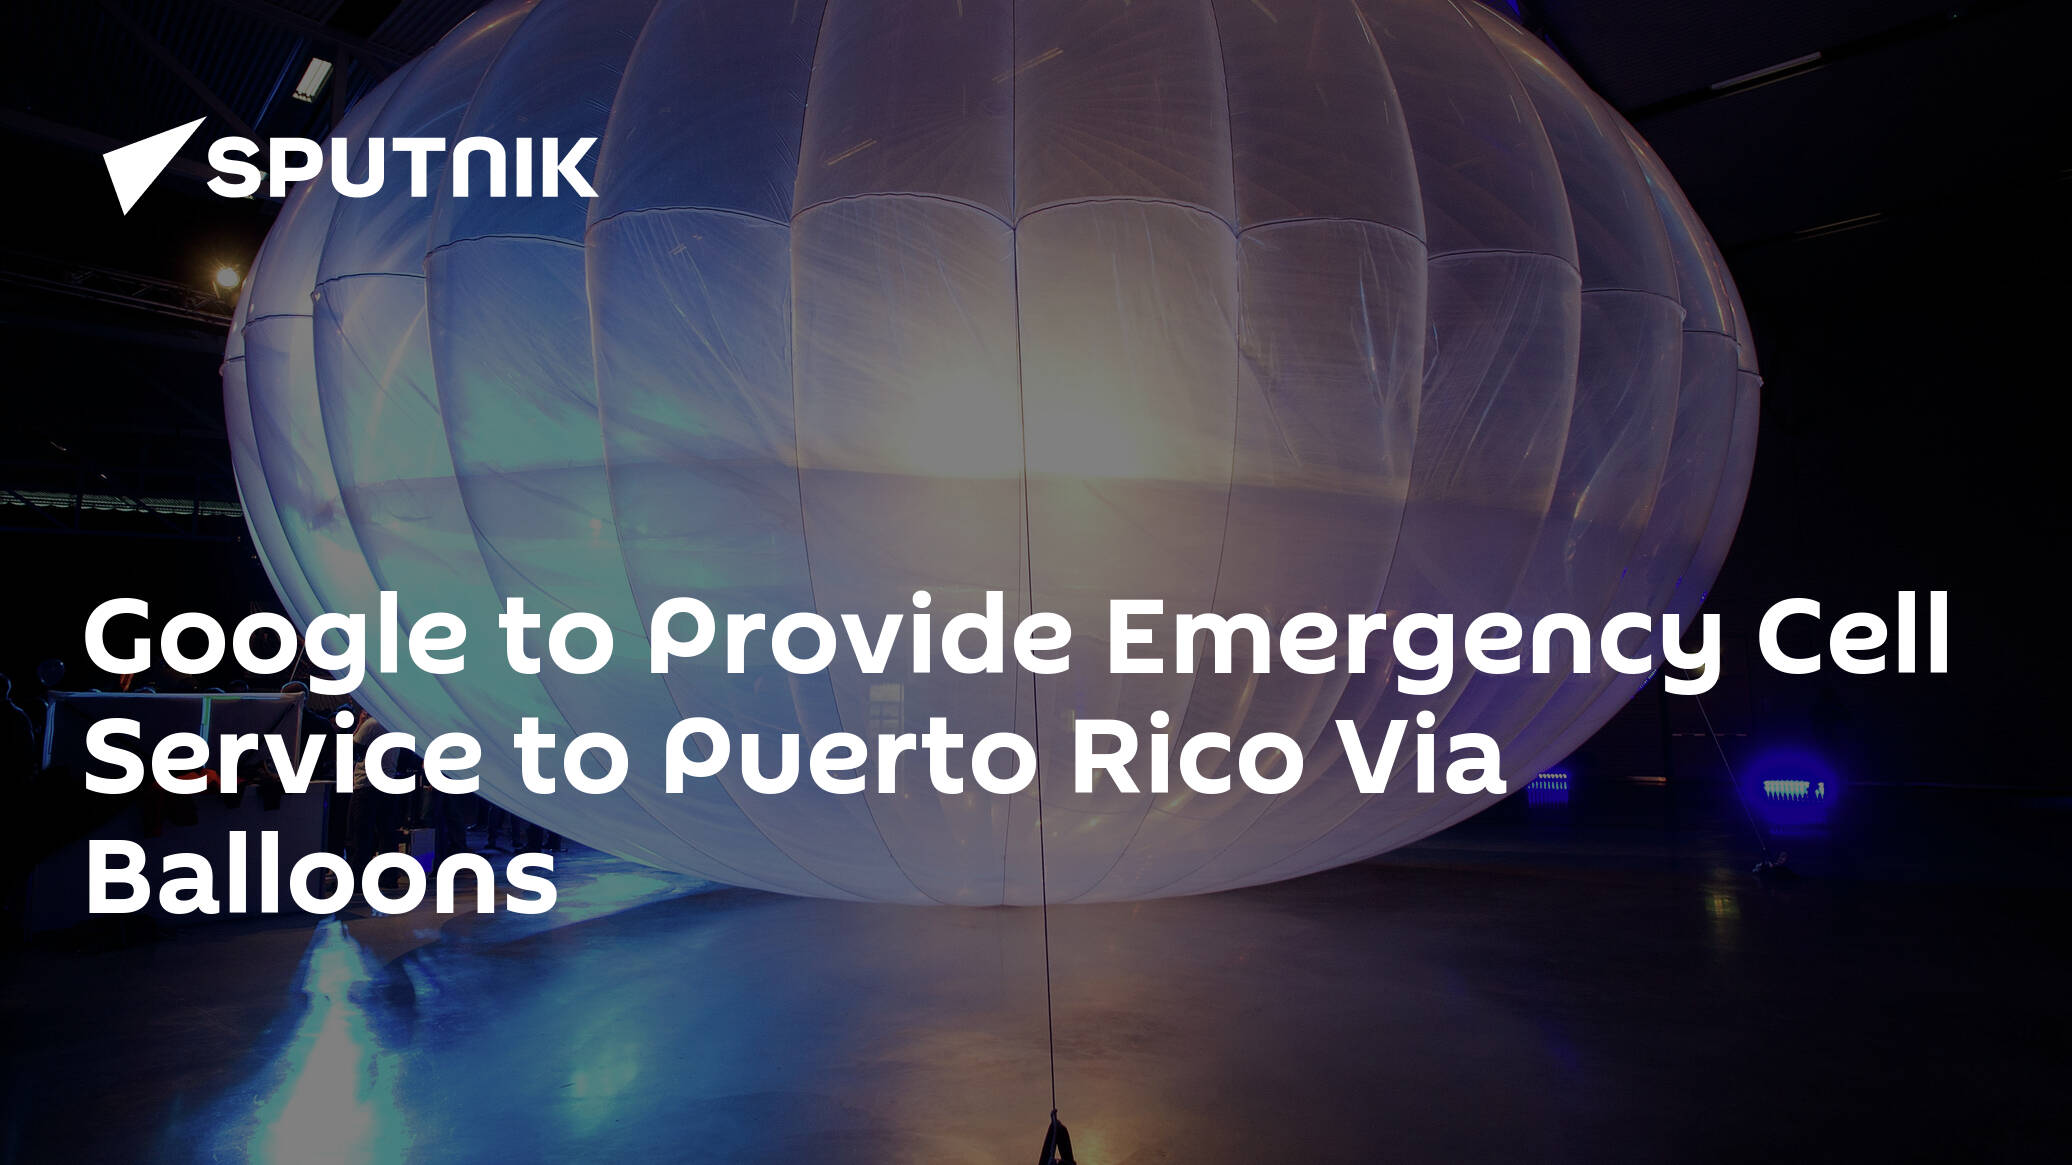 Google to Provide Emergency Cell Service to Puerto Rico Via Balloons -  07.10.2017, Sputnik International